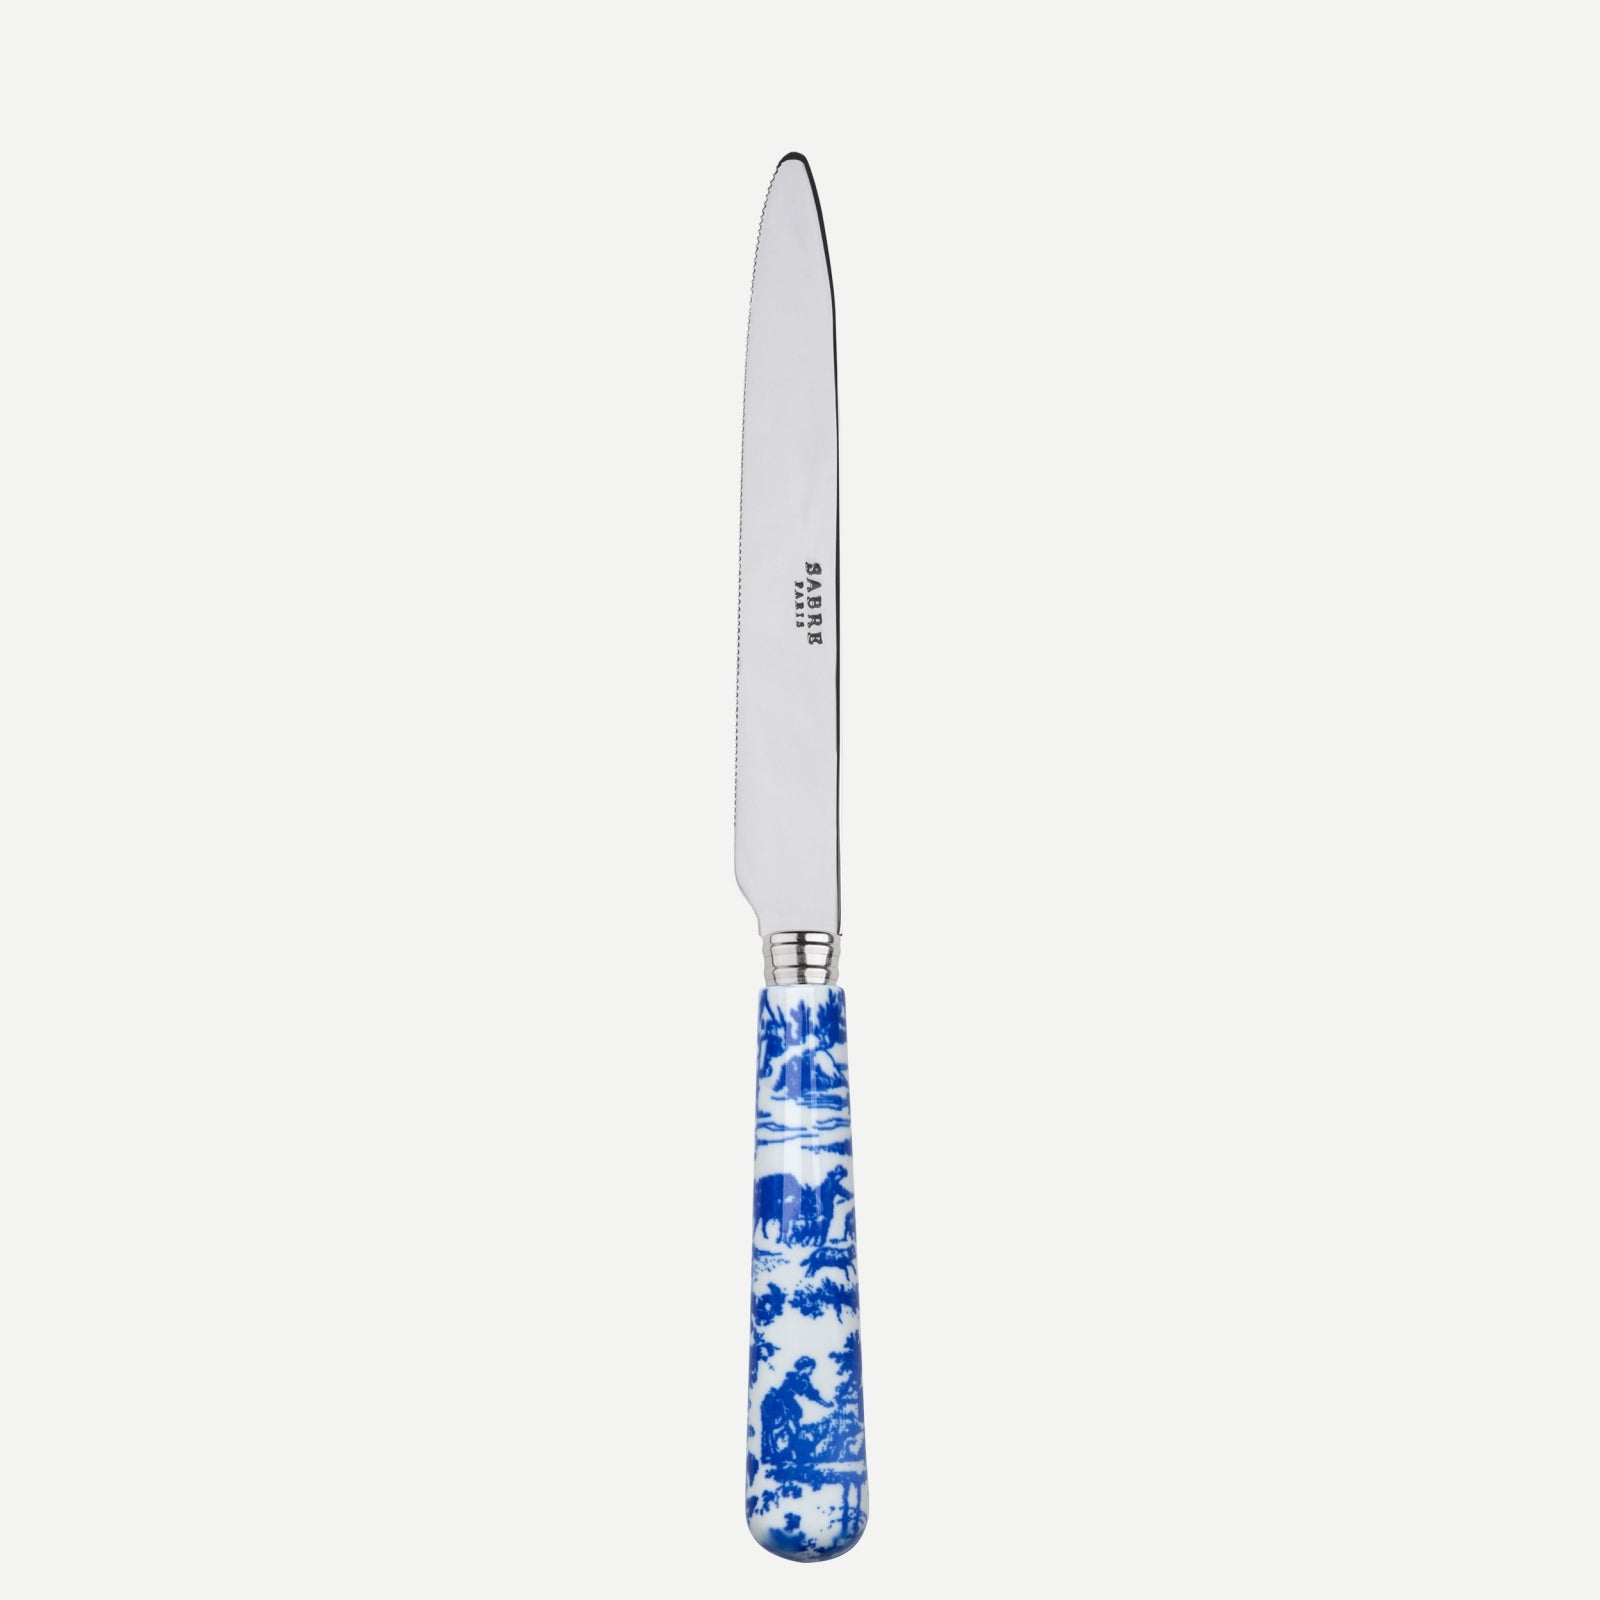 Messer mit Wellenschliff - toile de jouy - Blau